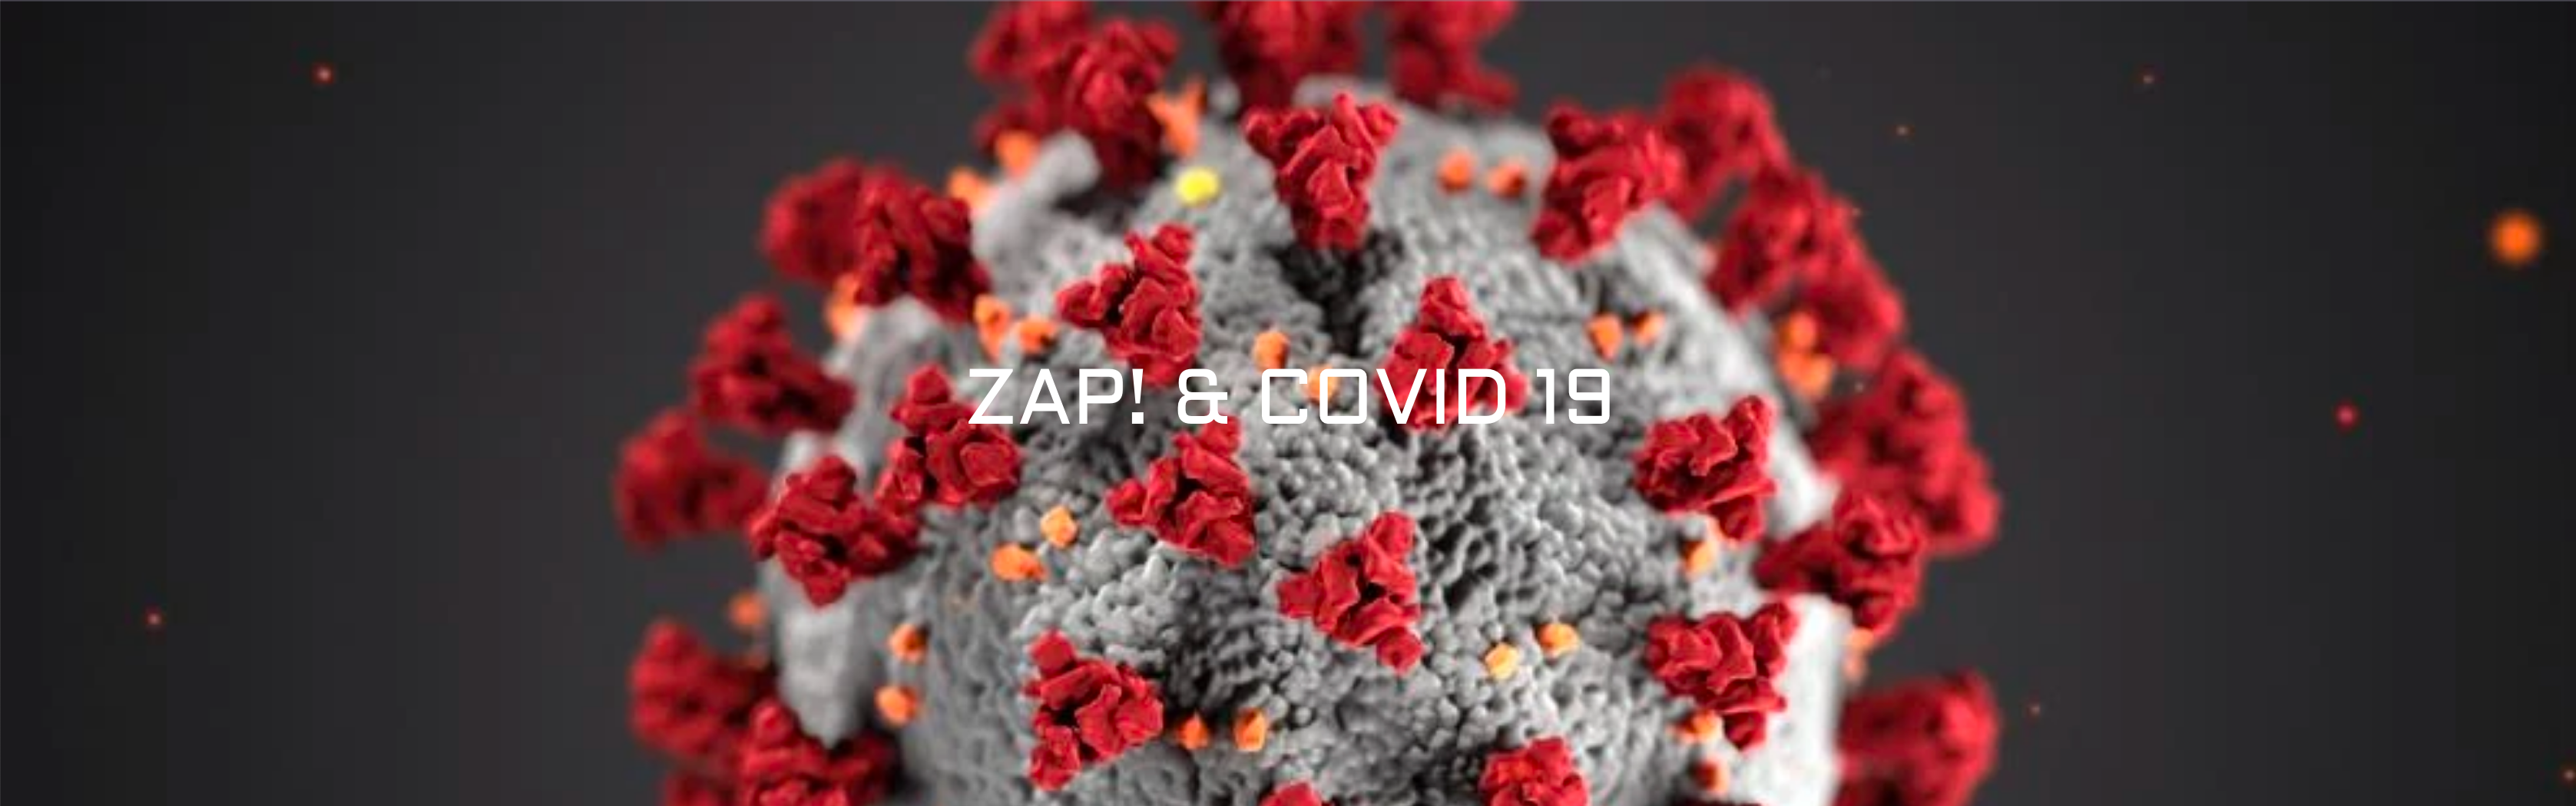 covid-19-Coronavirus-Zap-Aisu